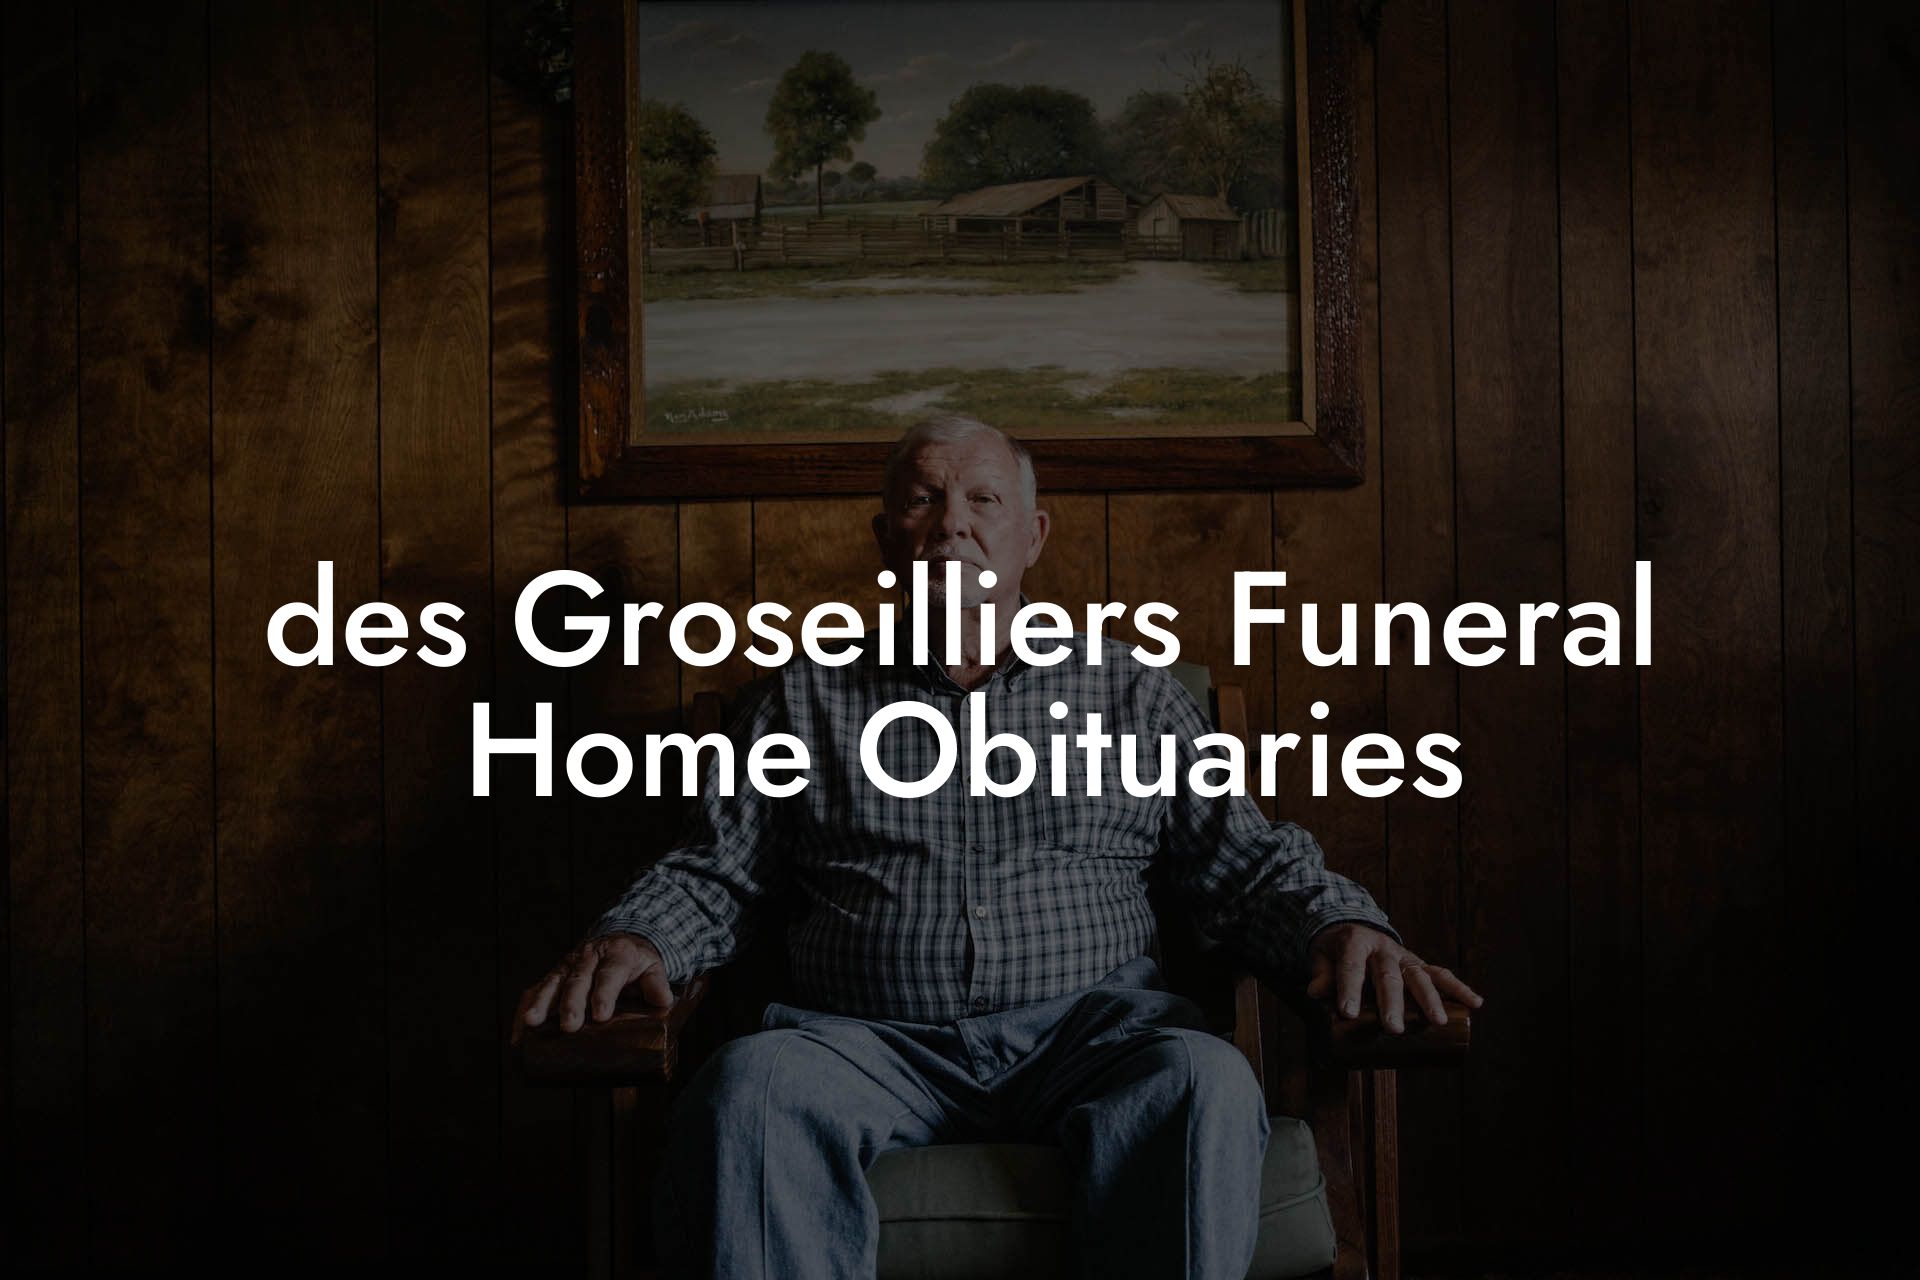 des Groseilliers Funeral Home Obituaries